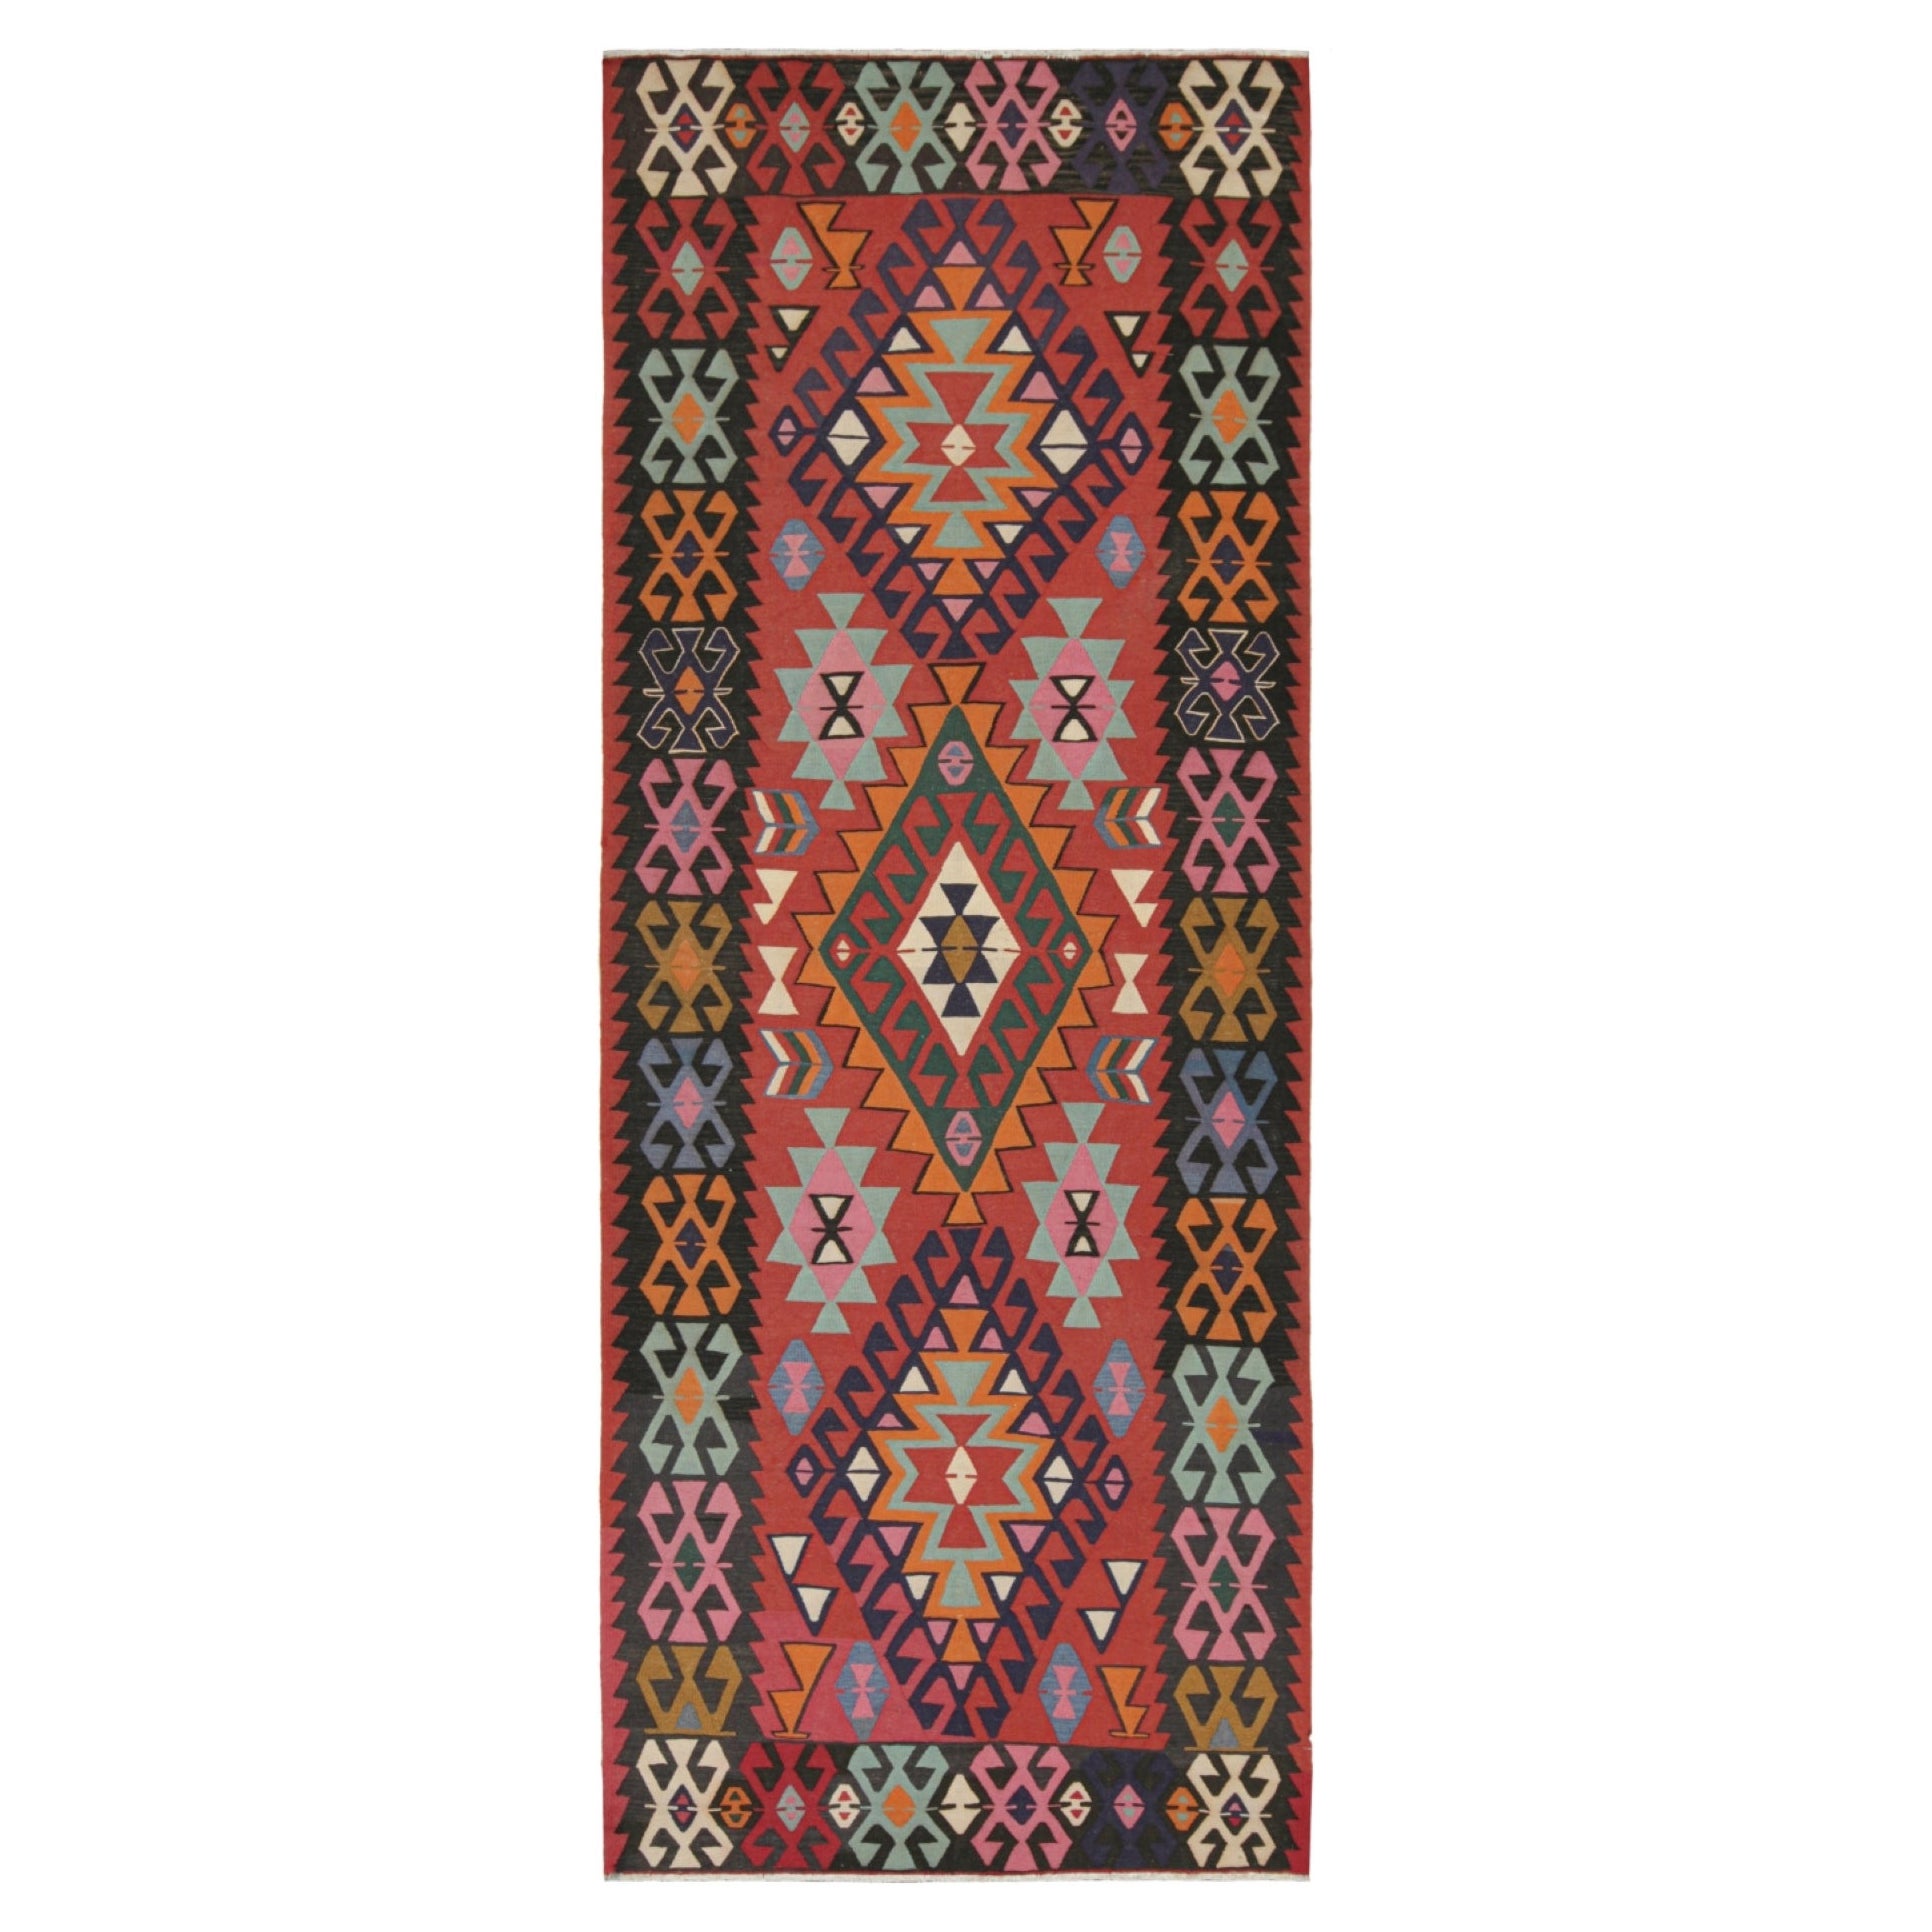 Vintage Azerbaijan Persian Kilim in Red with Geometric Patterns